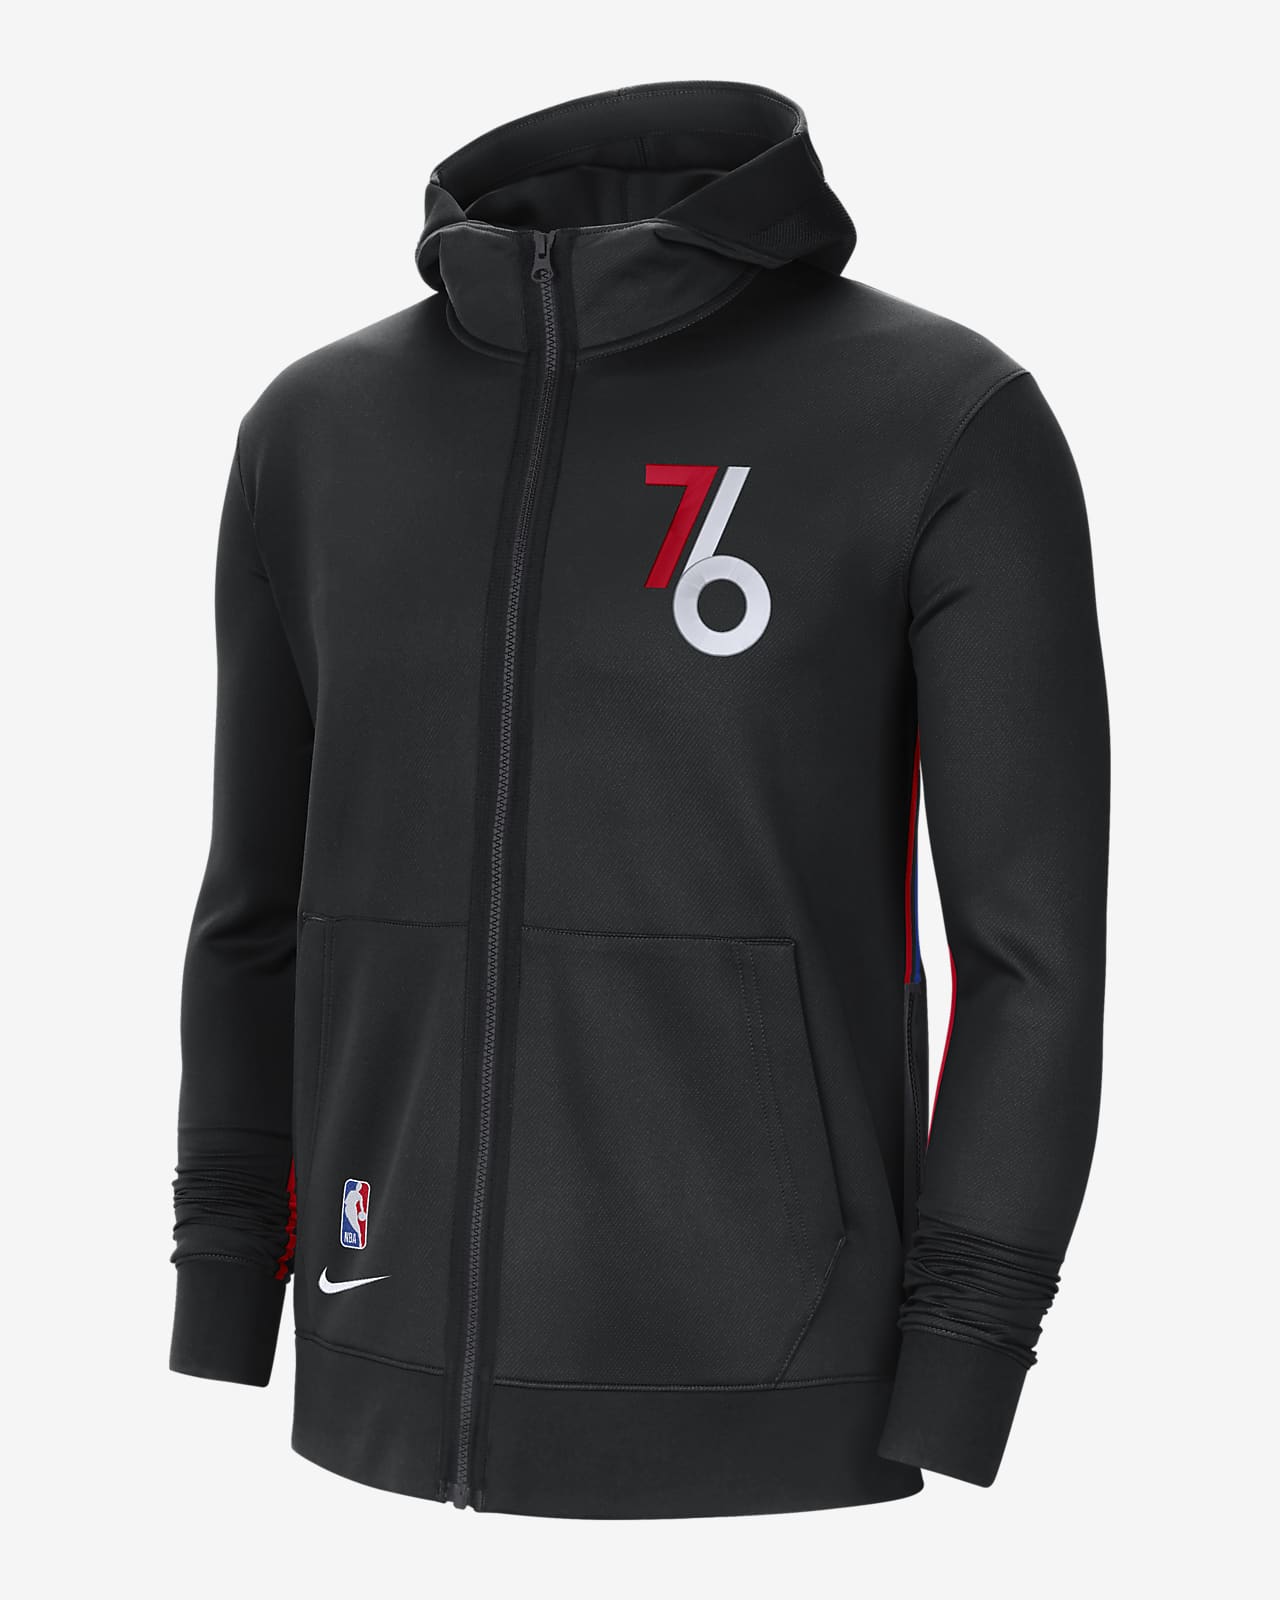 76ers hoodie city edition